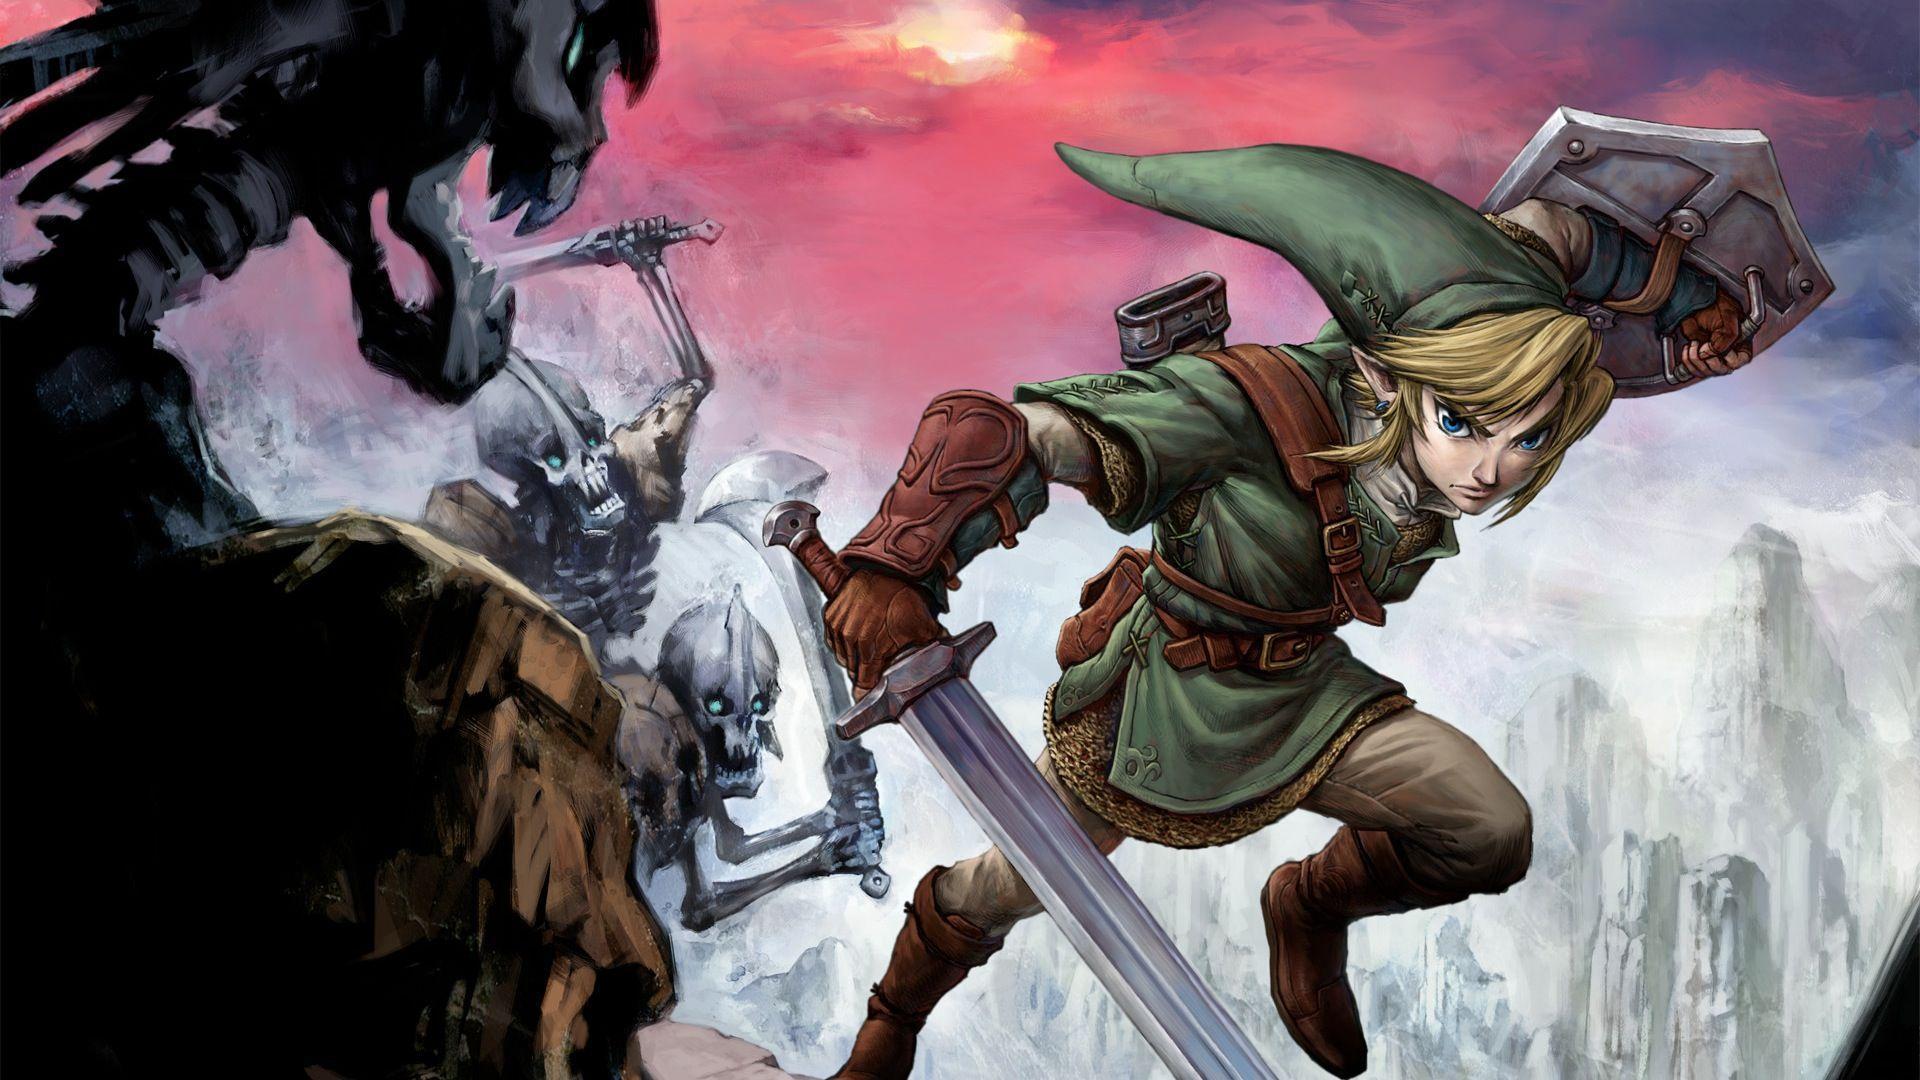 image For > Legend Of Zelda Twilight Princess iPhone Wallpaper